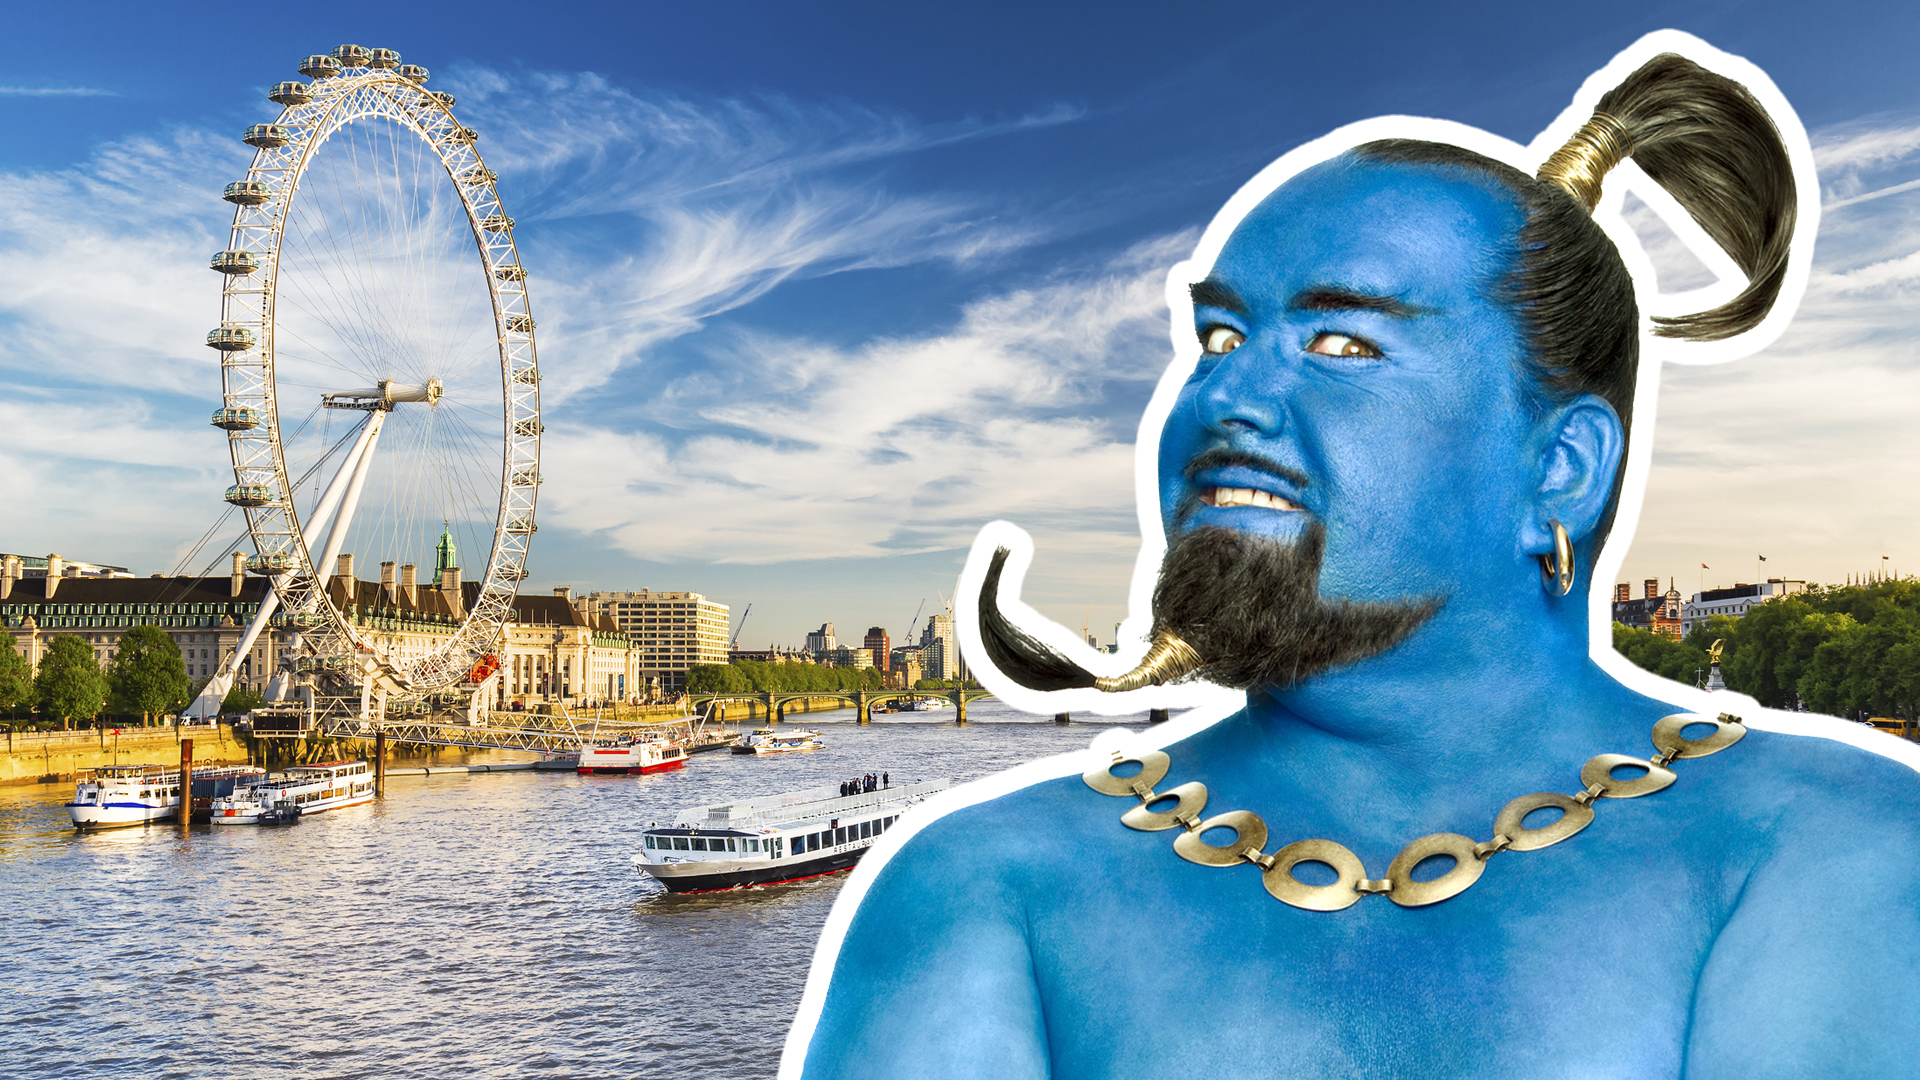 A genie tourist in London